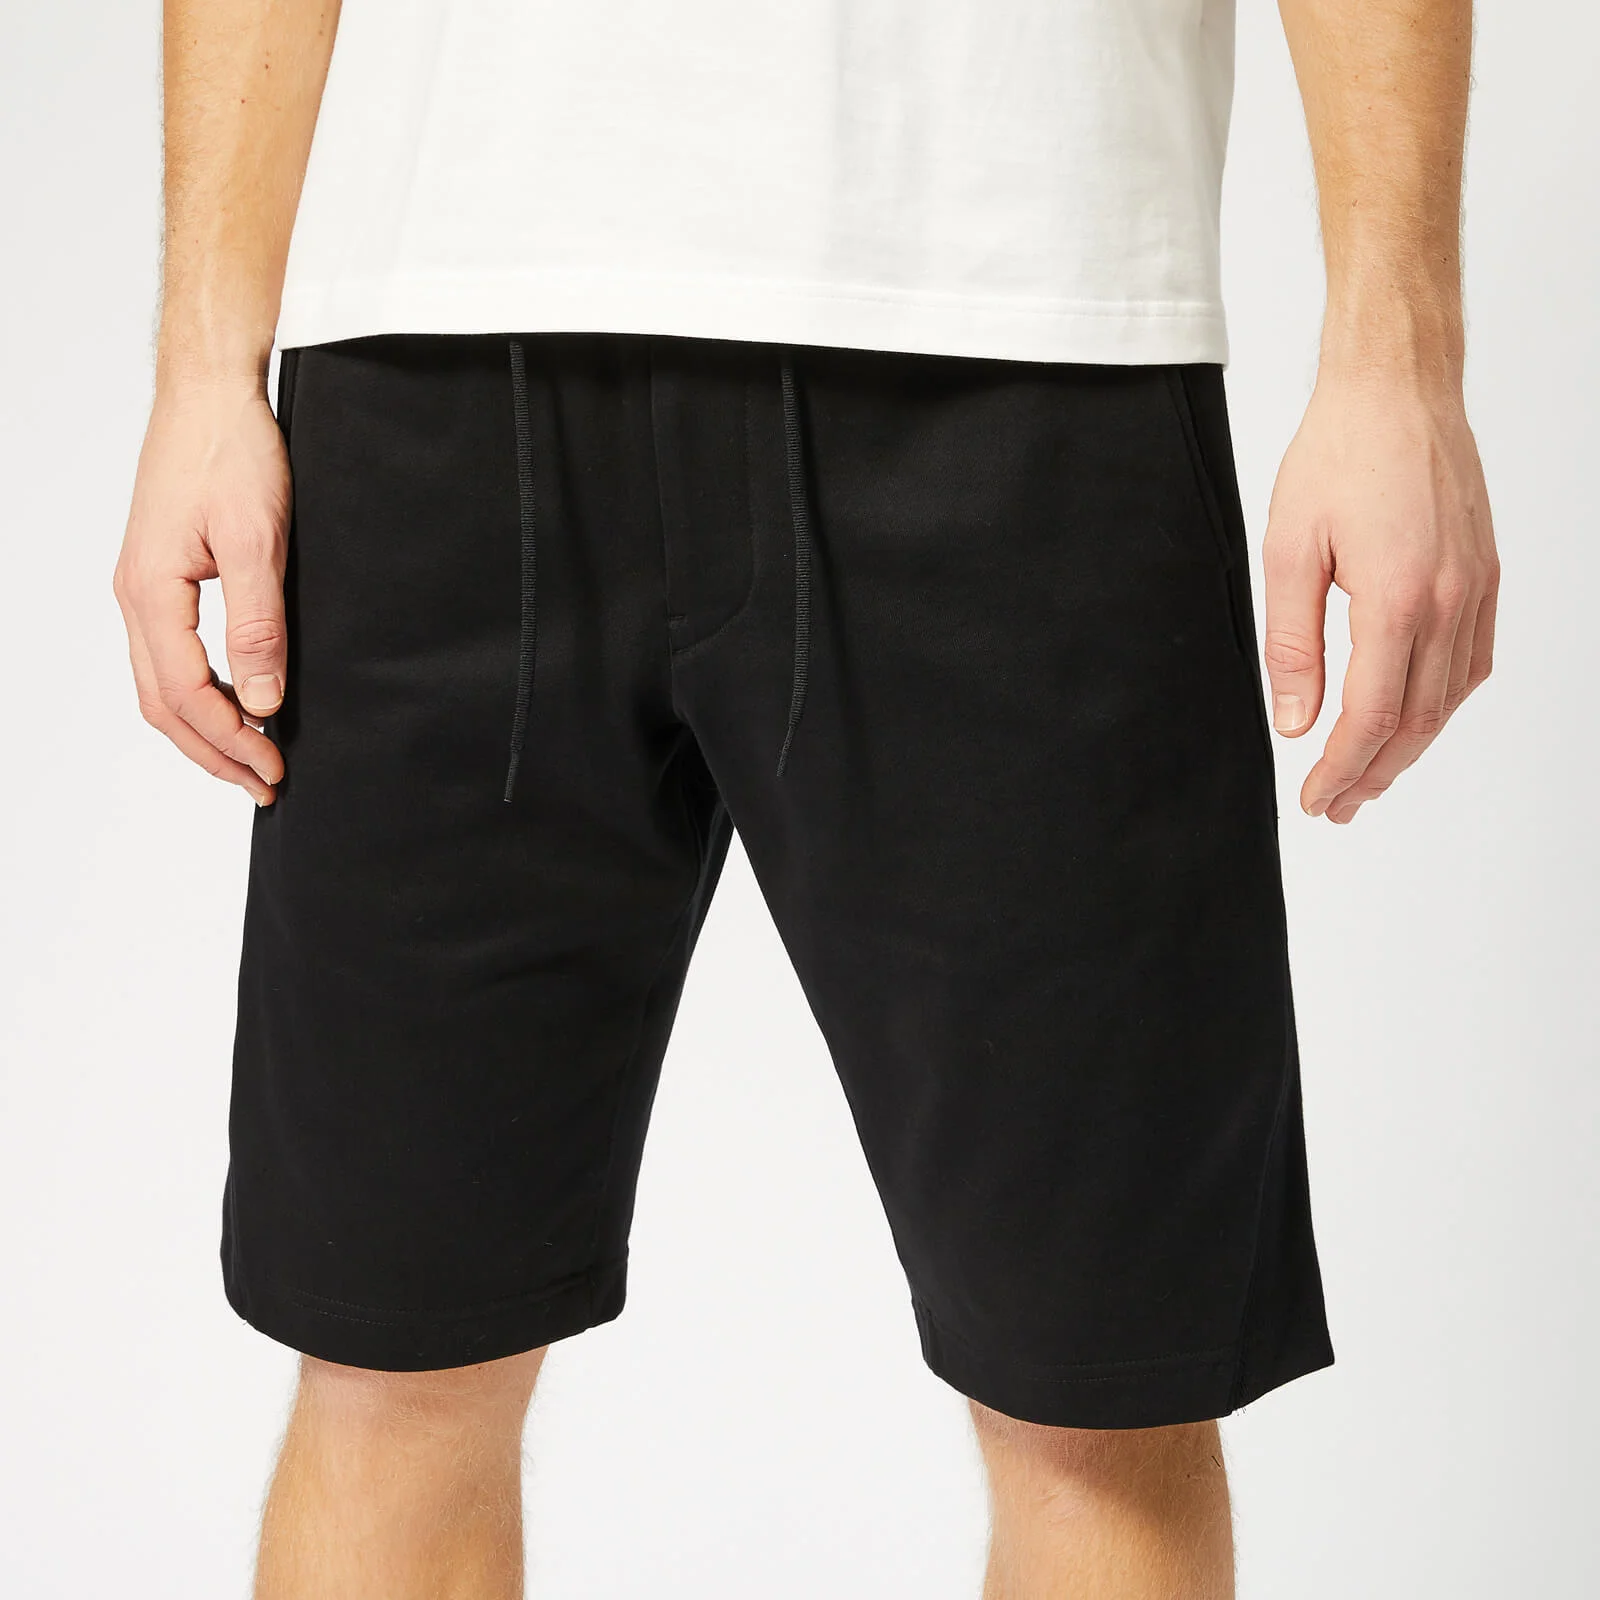 Y-3 Men's New Classic Shorts - Black Image 1